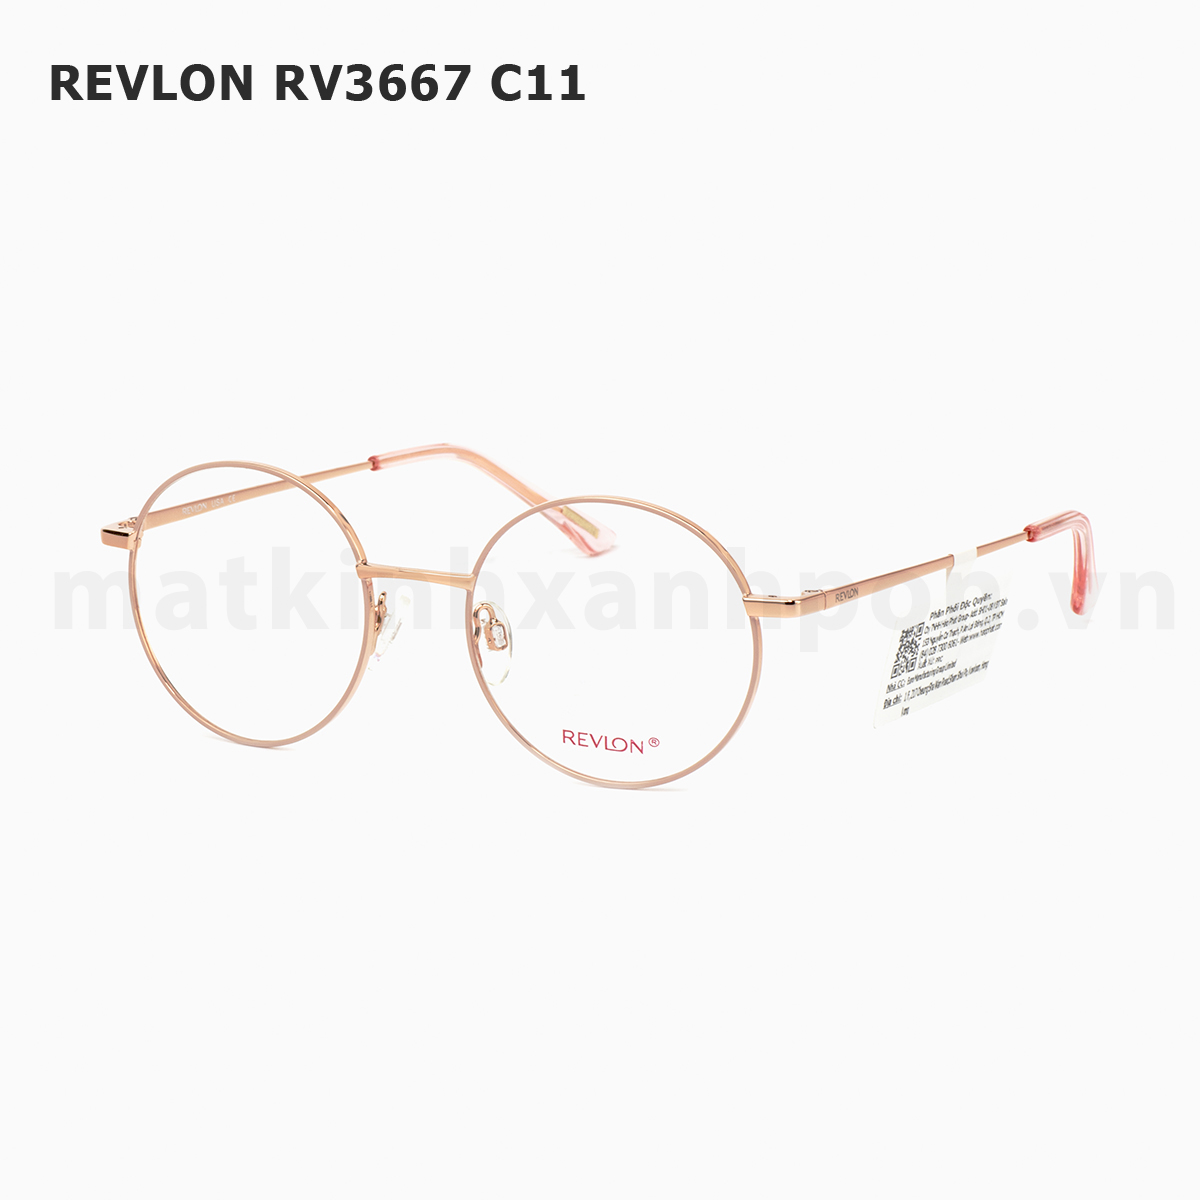 Revlon RV3667 C11